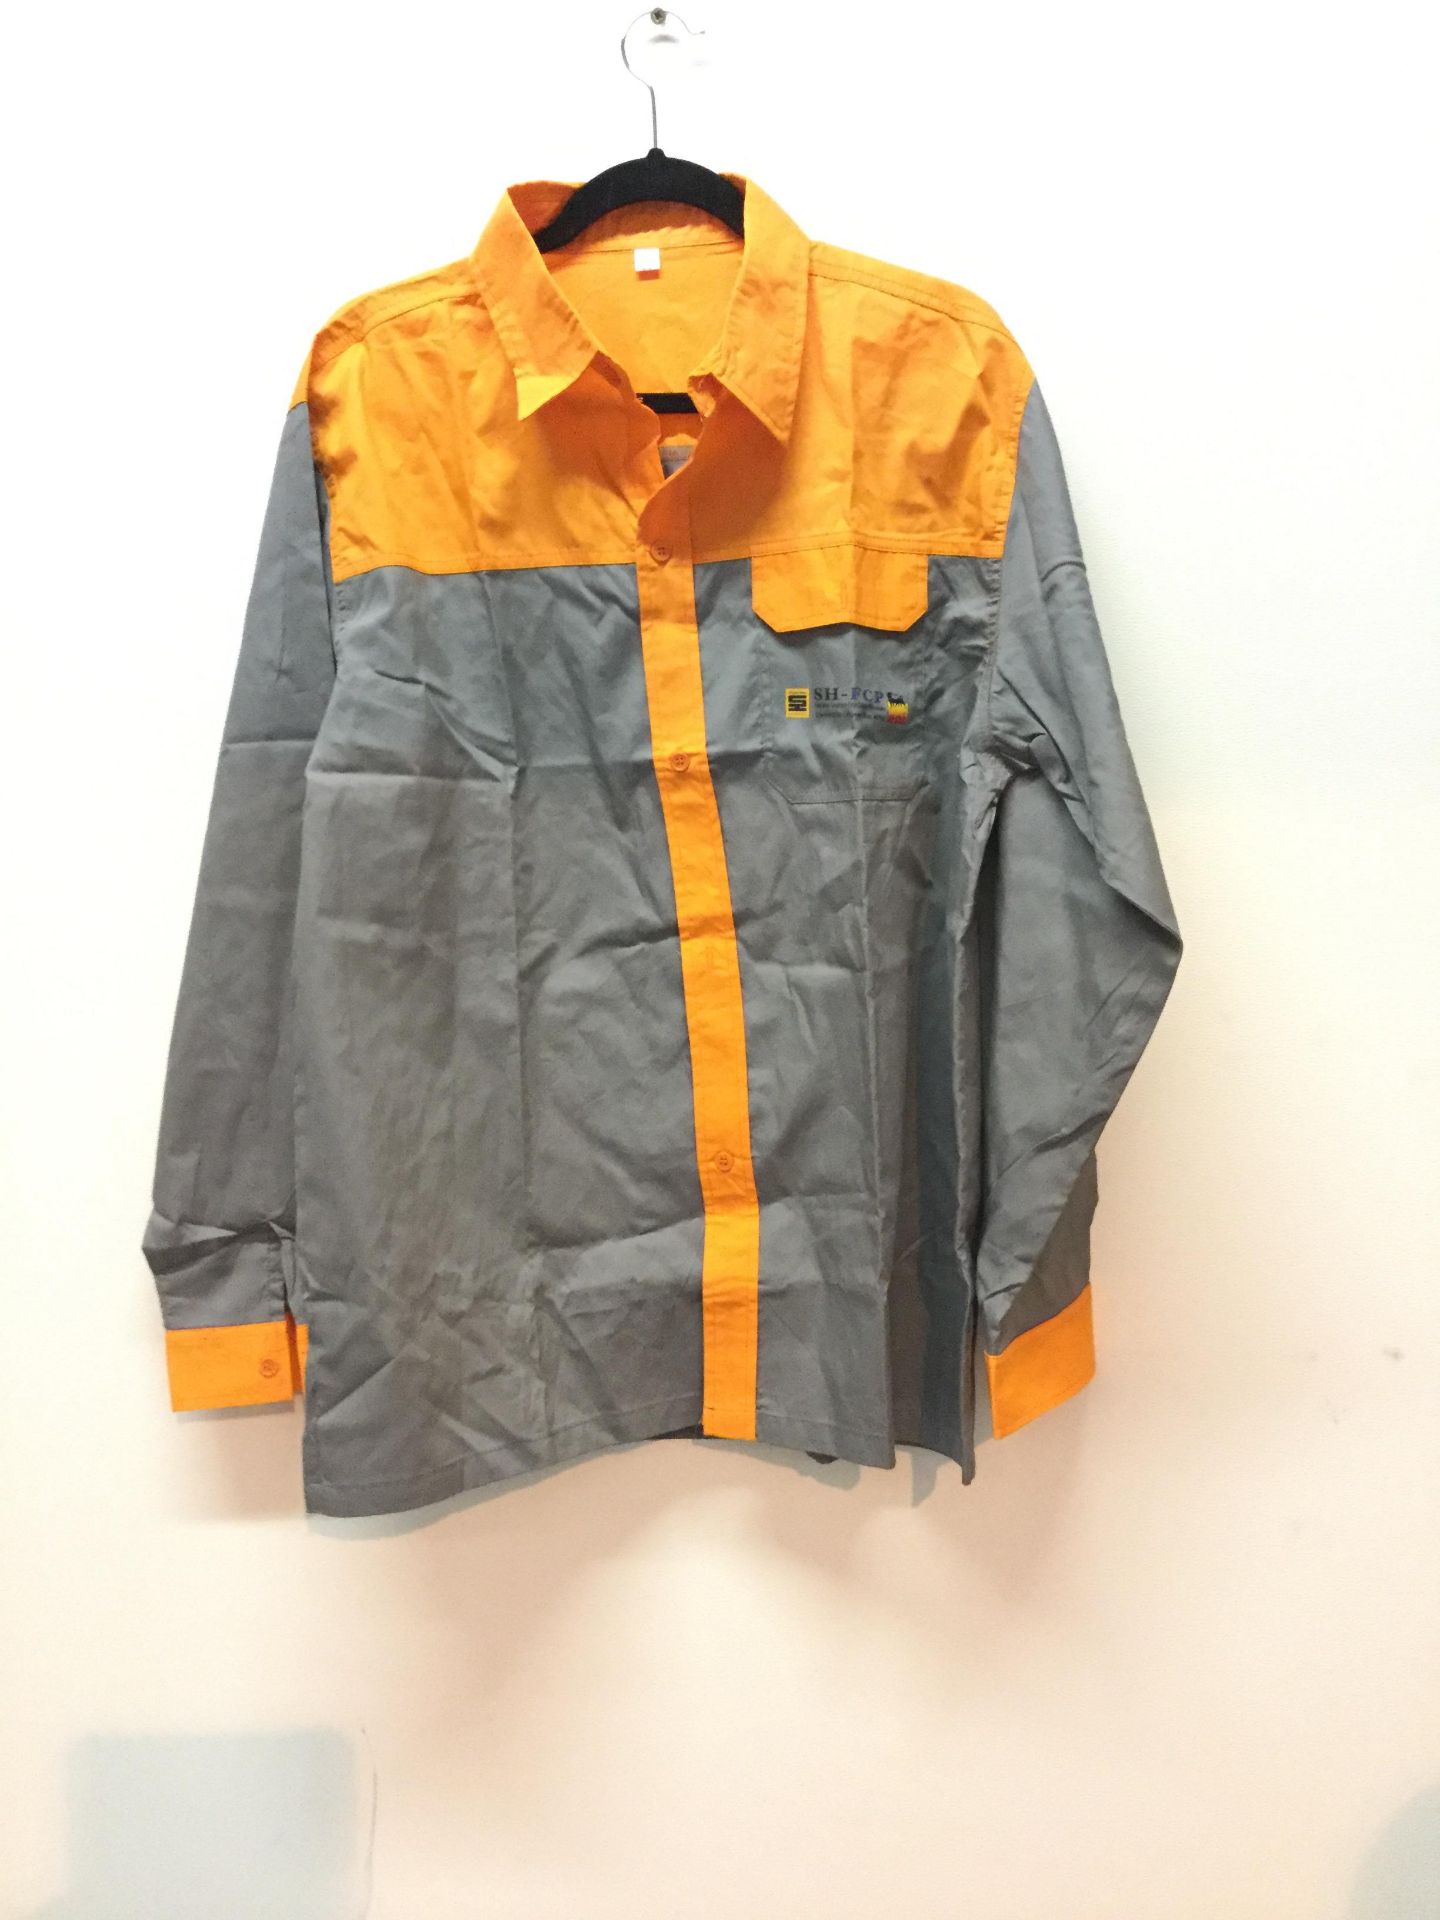 Summer Long Sleeve Work Shirt - Size 48 - Image 2 of 2